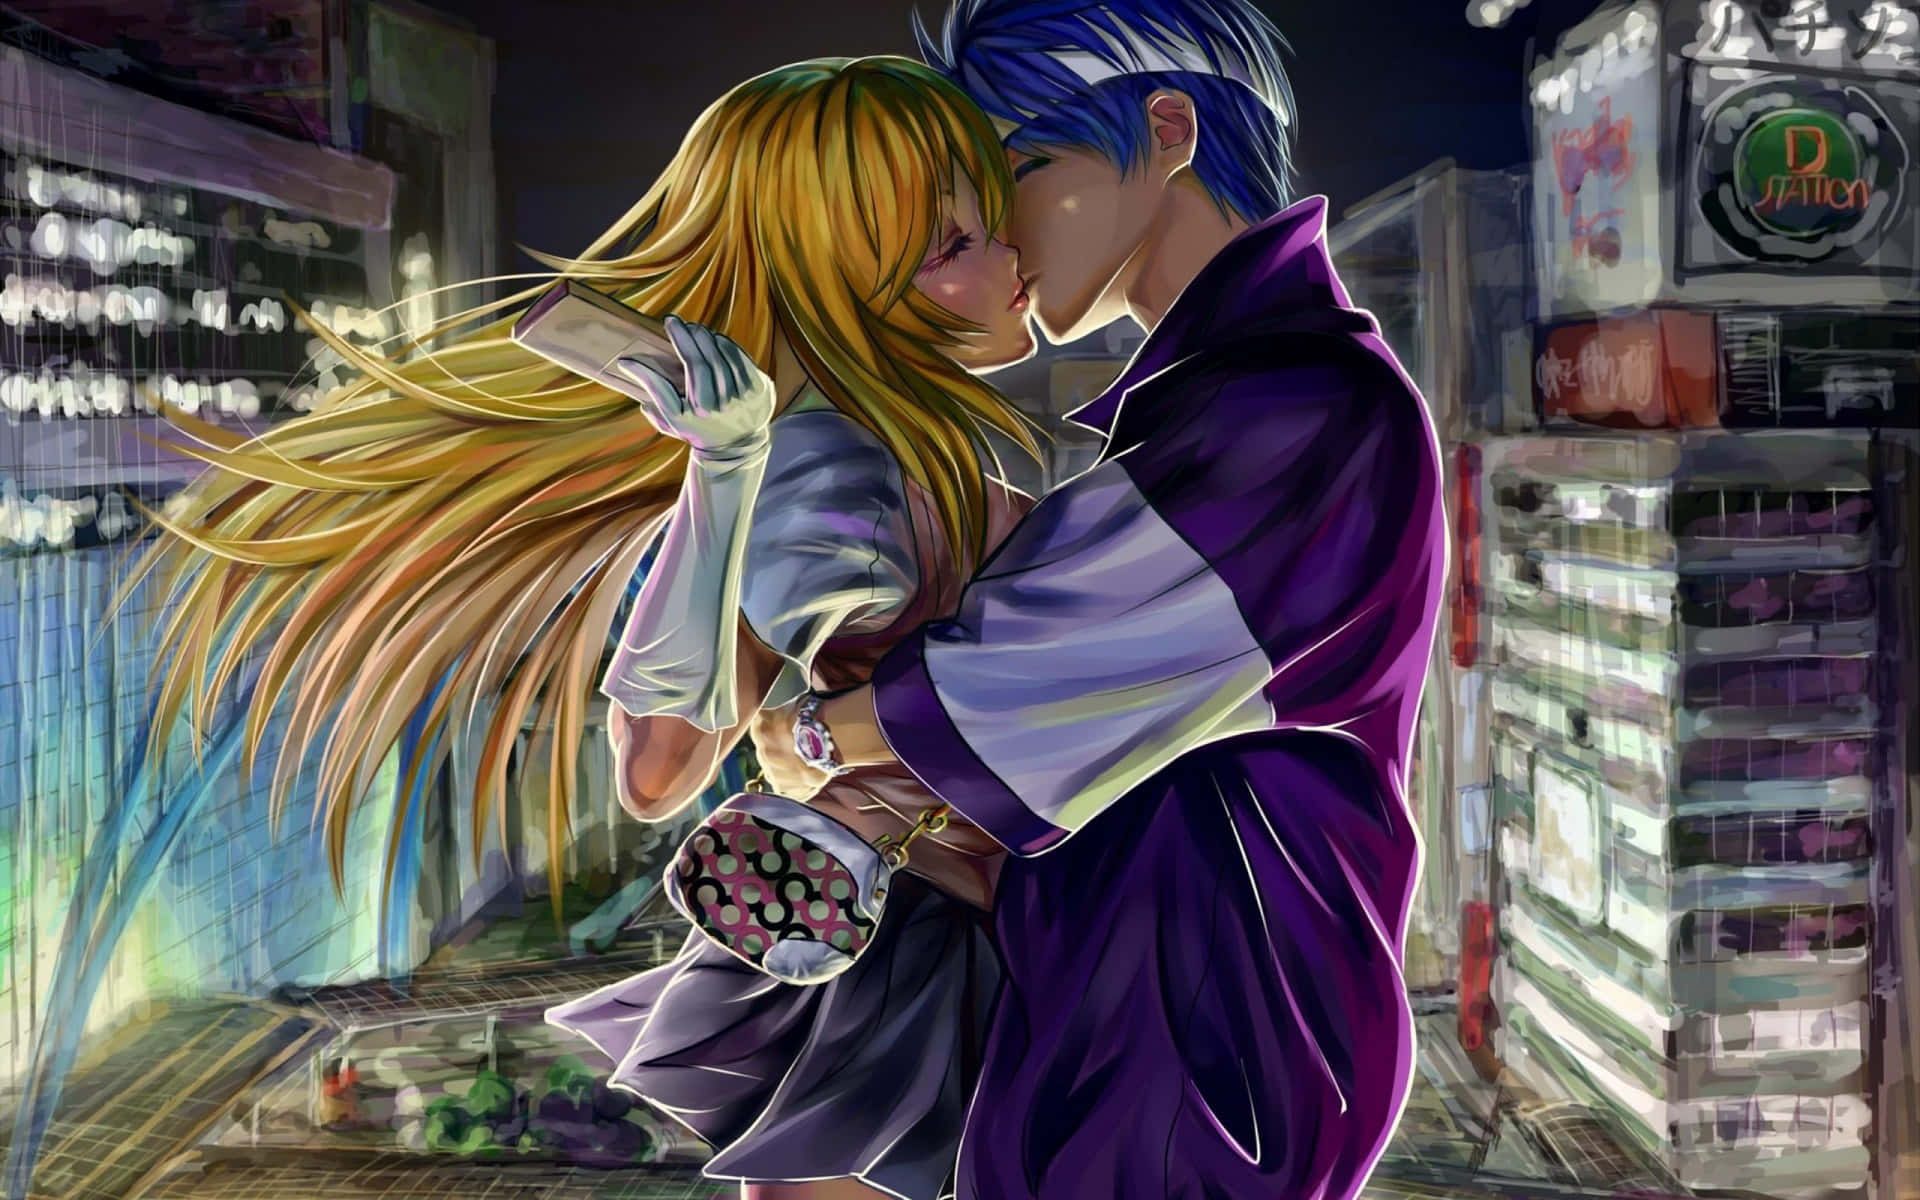 8 Beautiful Romantic Anime You Must Watch to feel Love